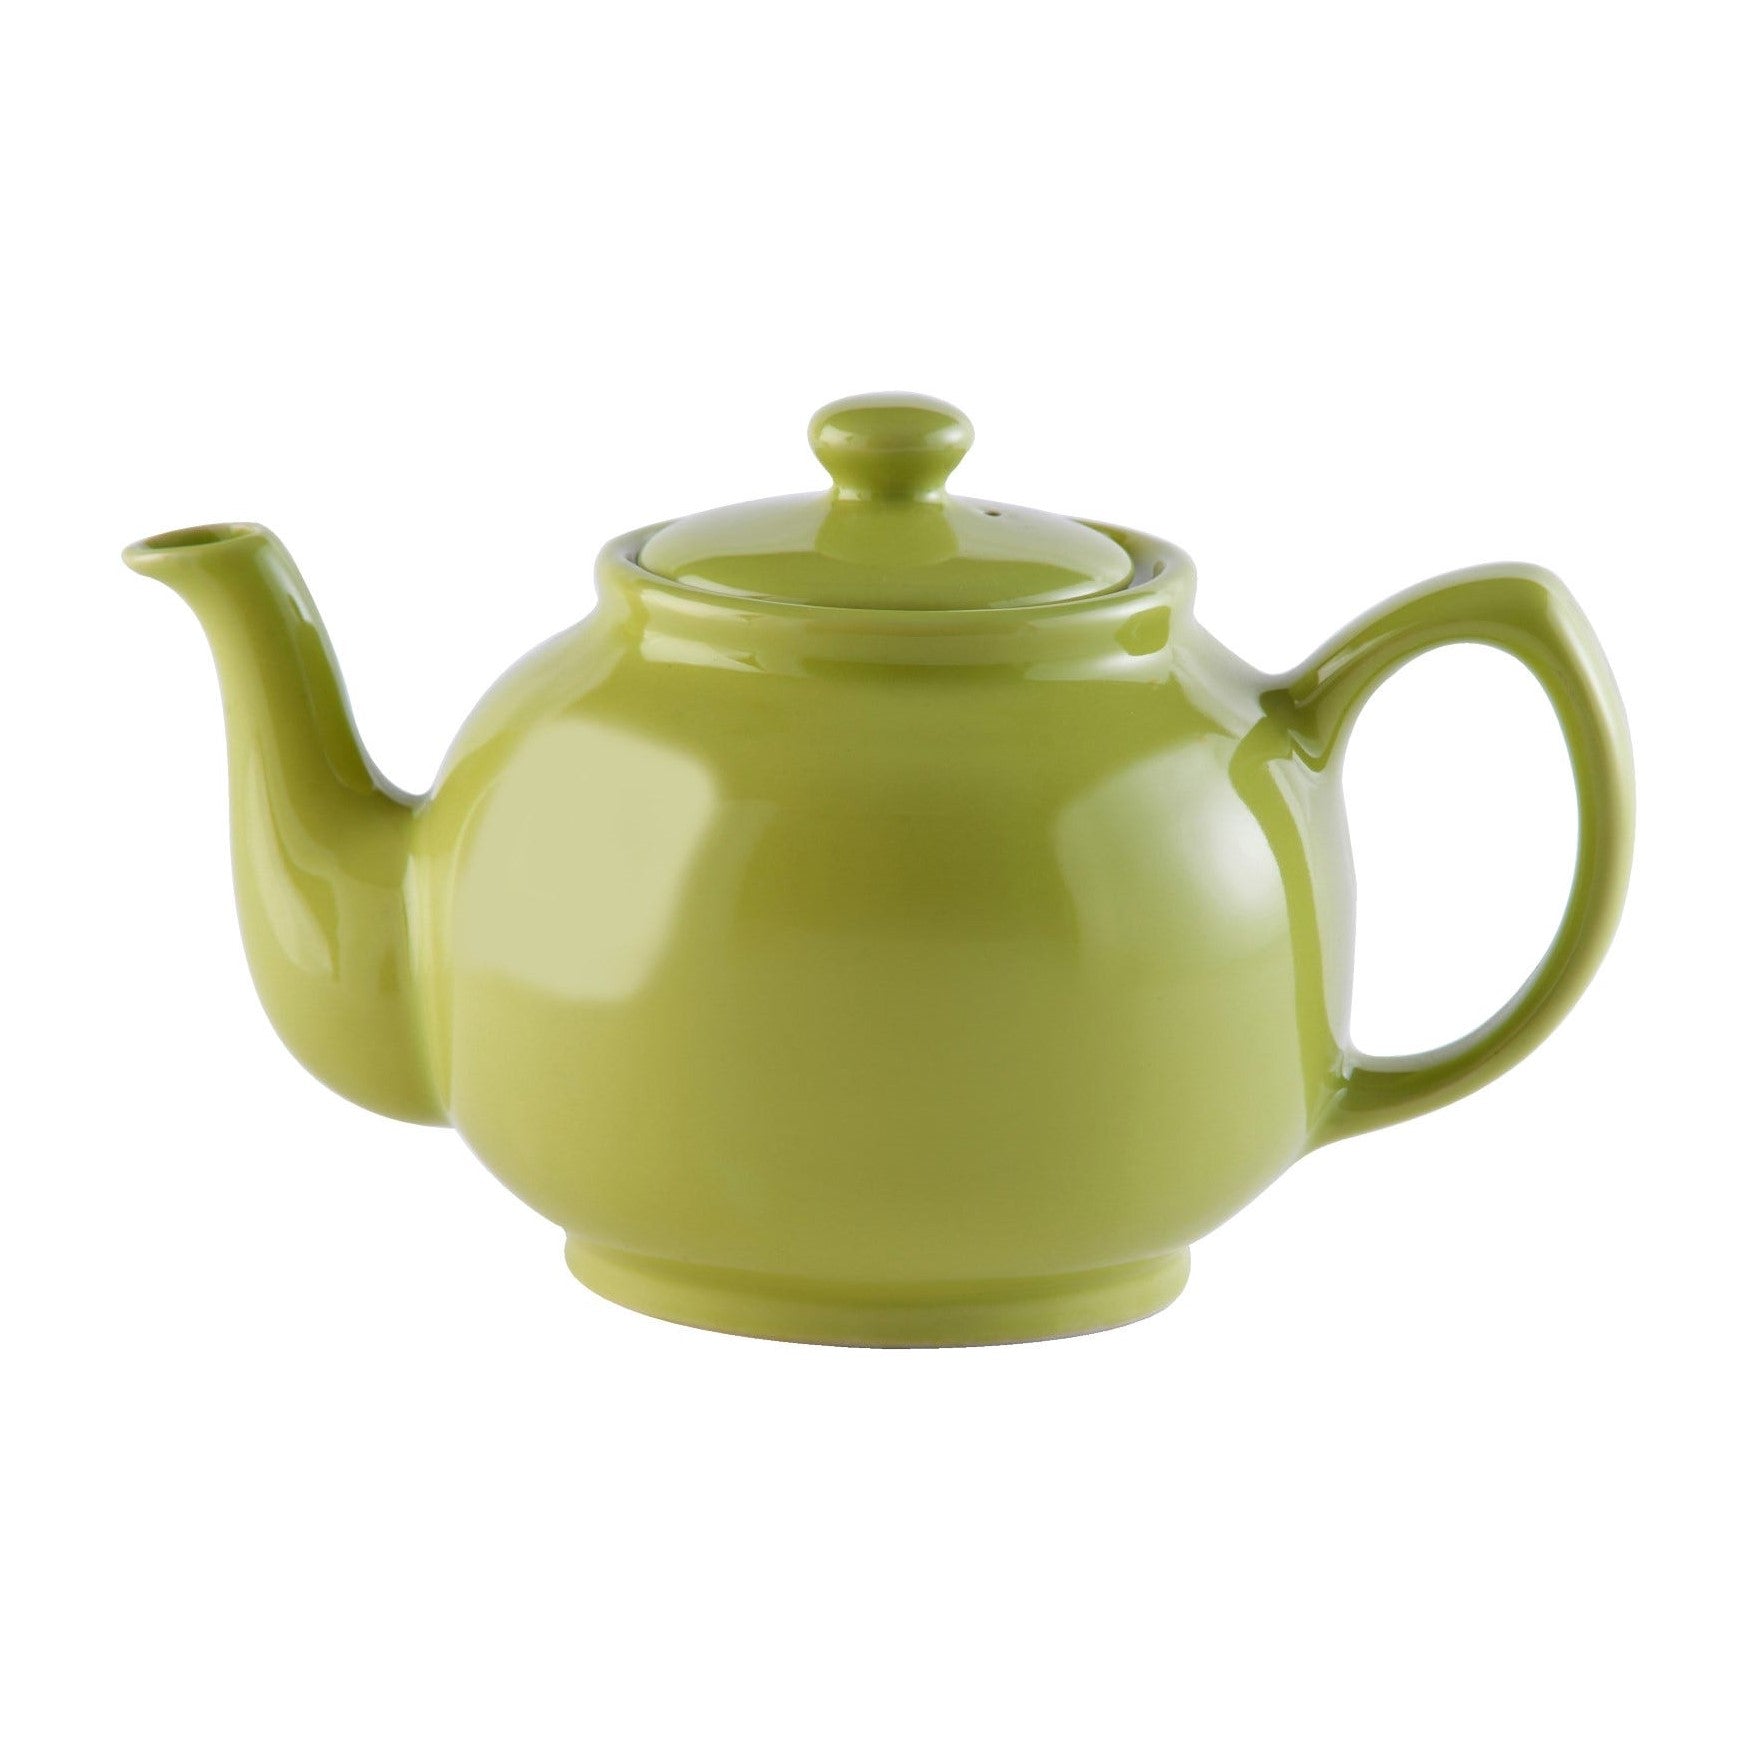 6 Cup Teapot 1100ml Bright Green Stoneware